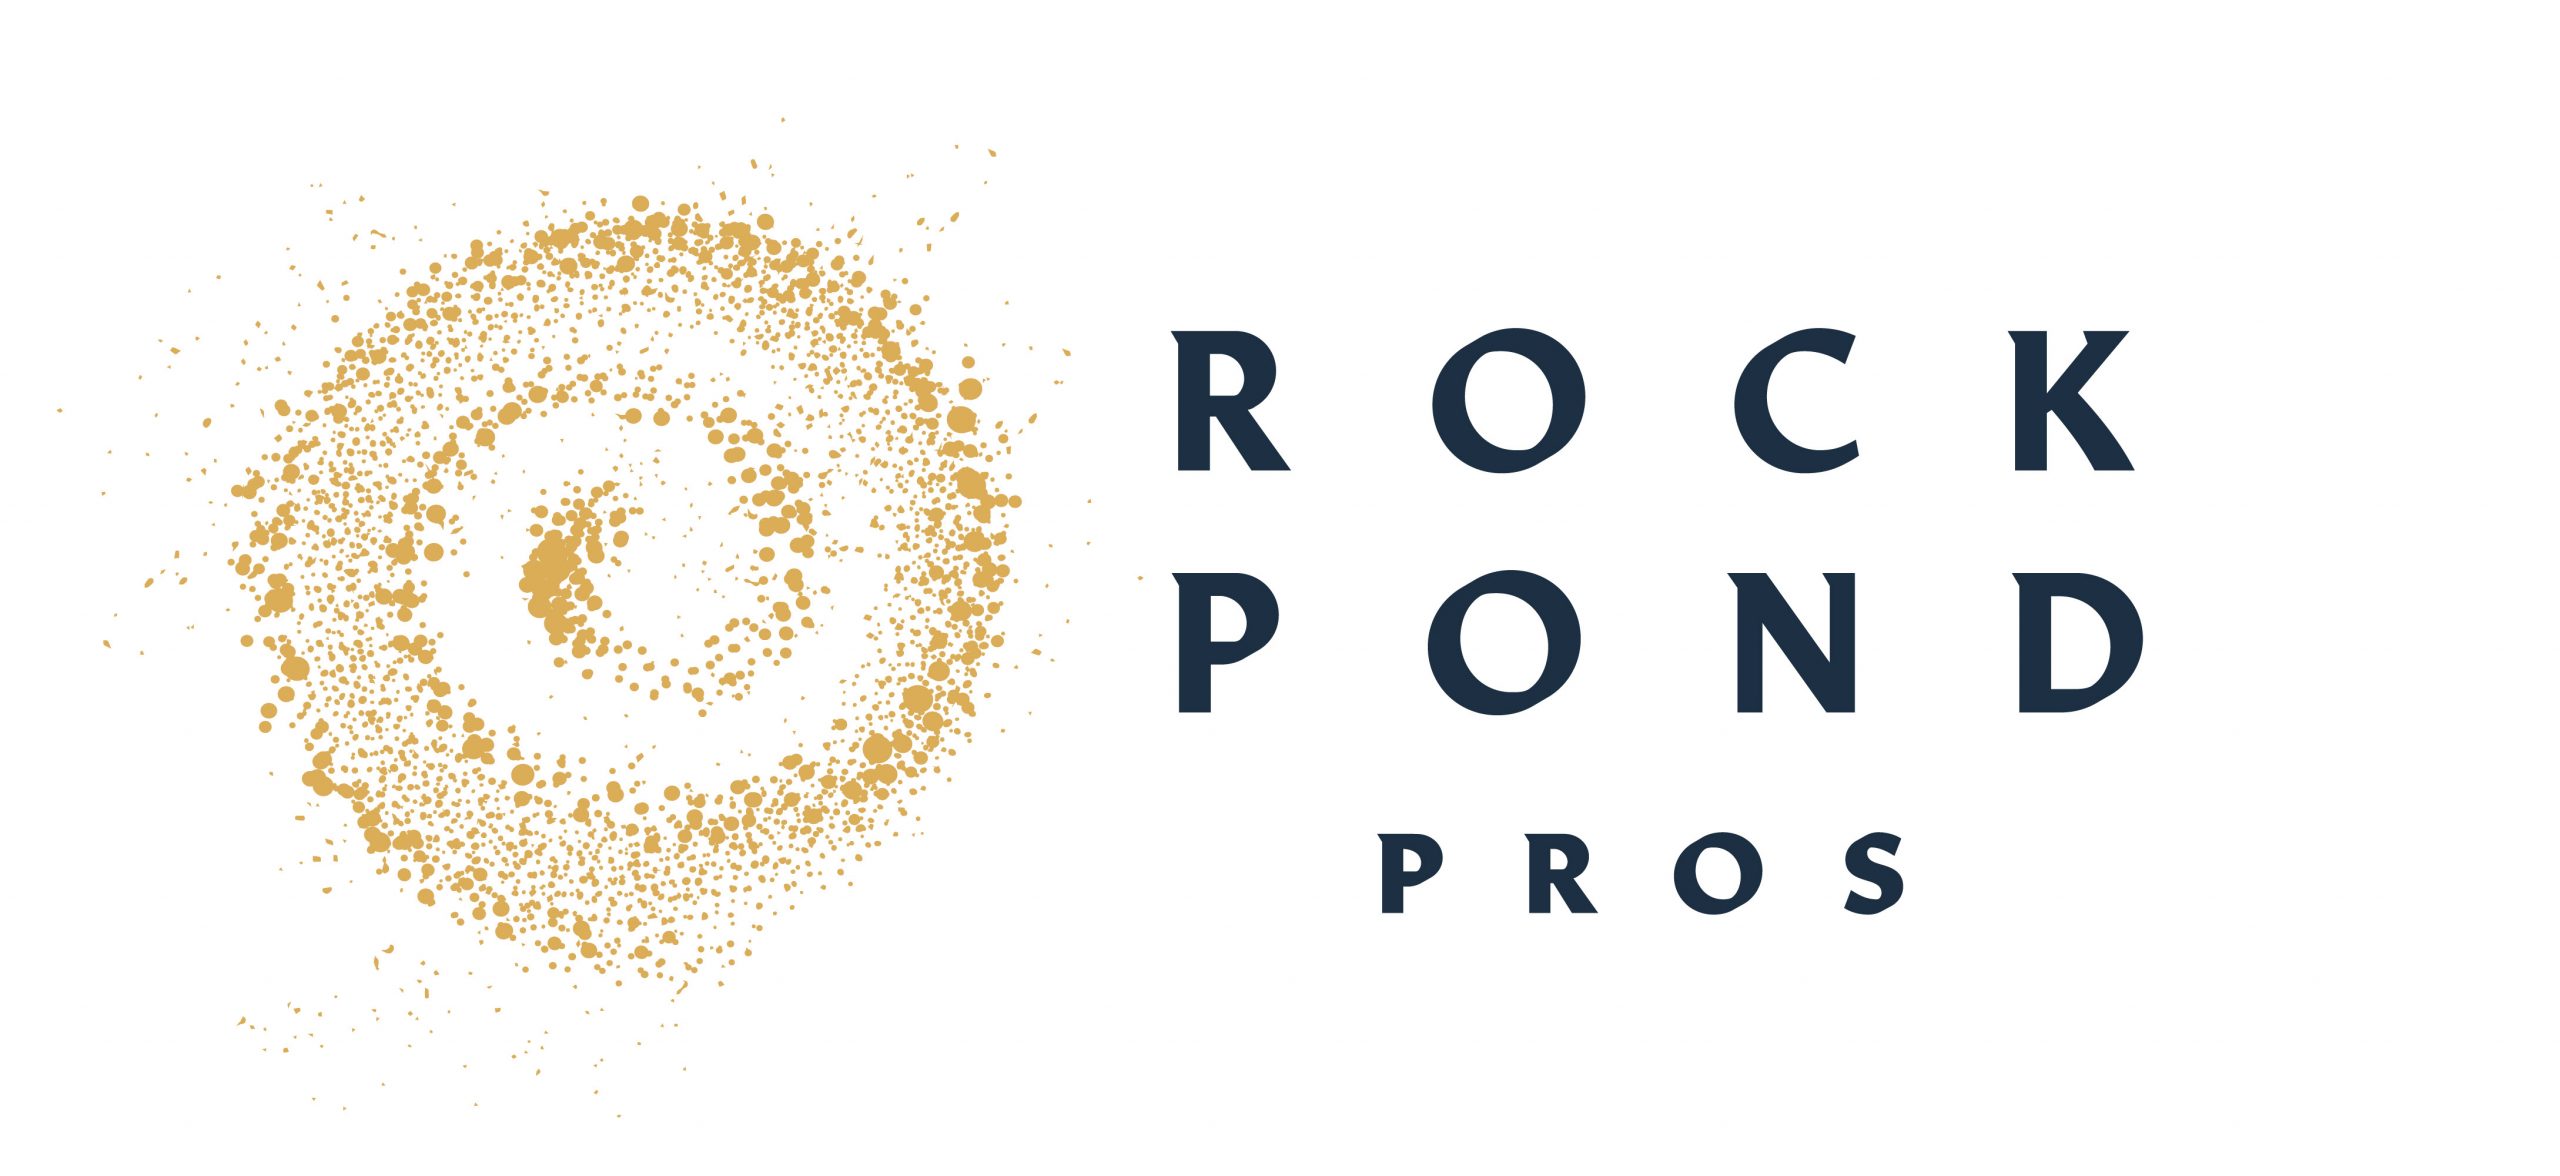 Rock Pond Pros logo